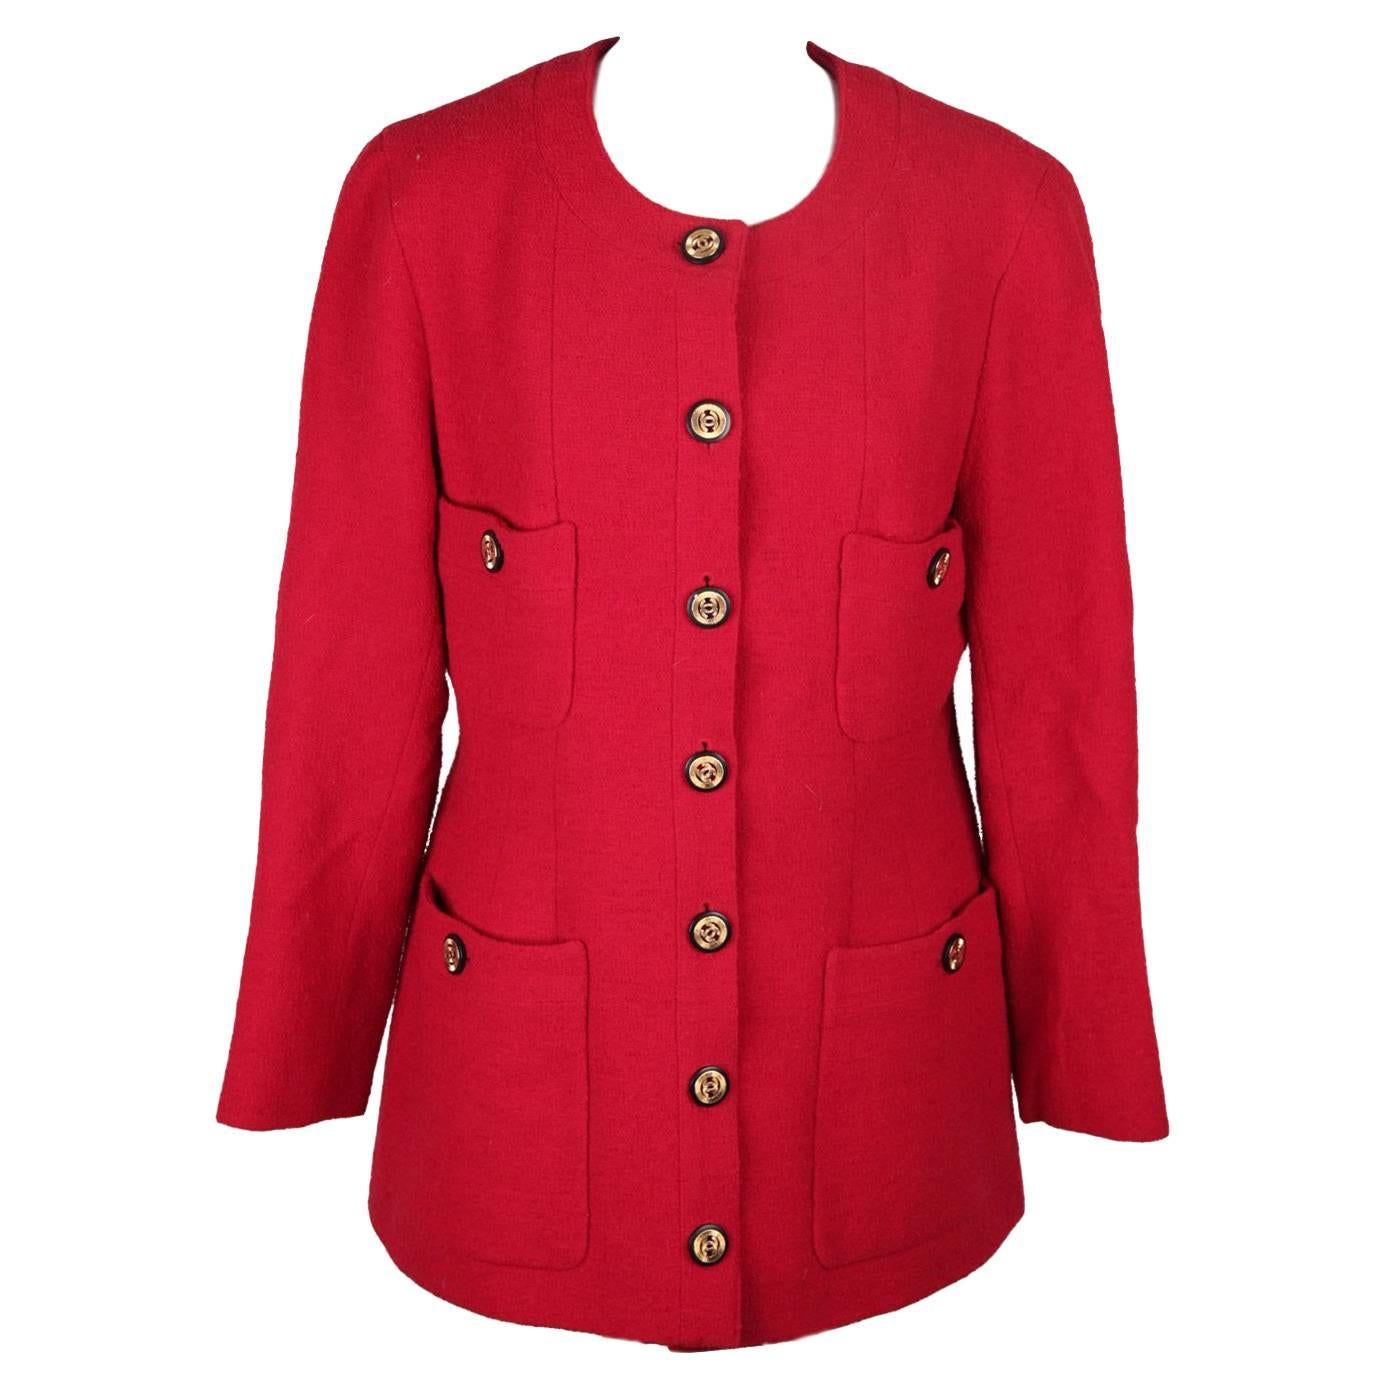 Chanel Boutique Vintage Red Collarless Blazer Jacket